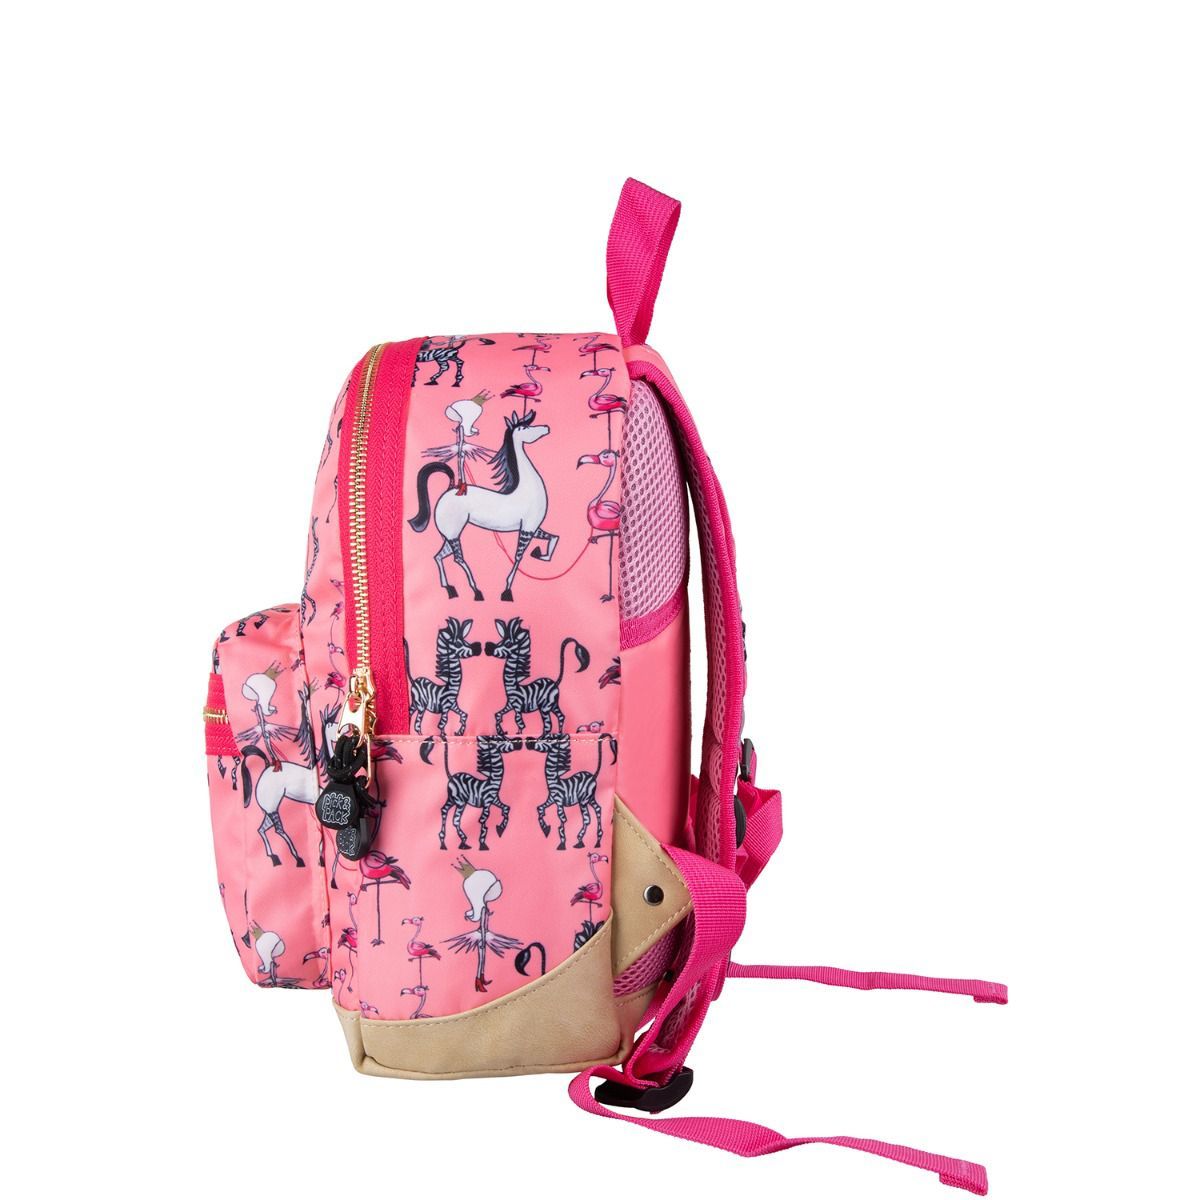 Pick & Pack Royal Princess Bright Pink Kinderrucksack S